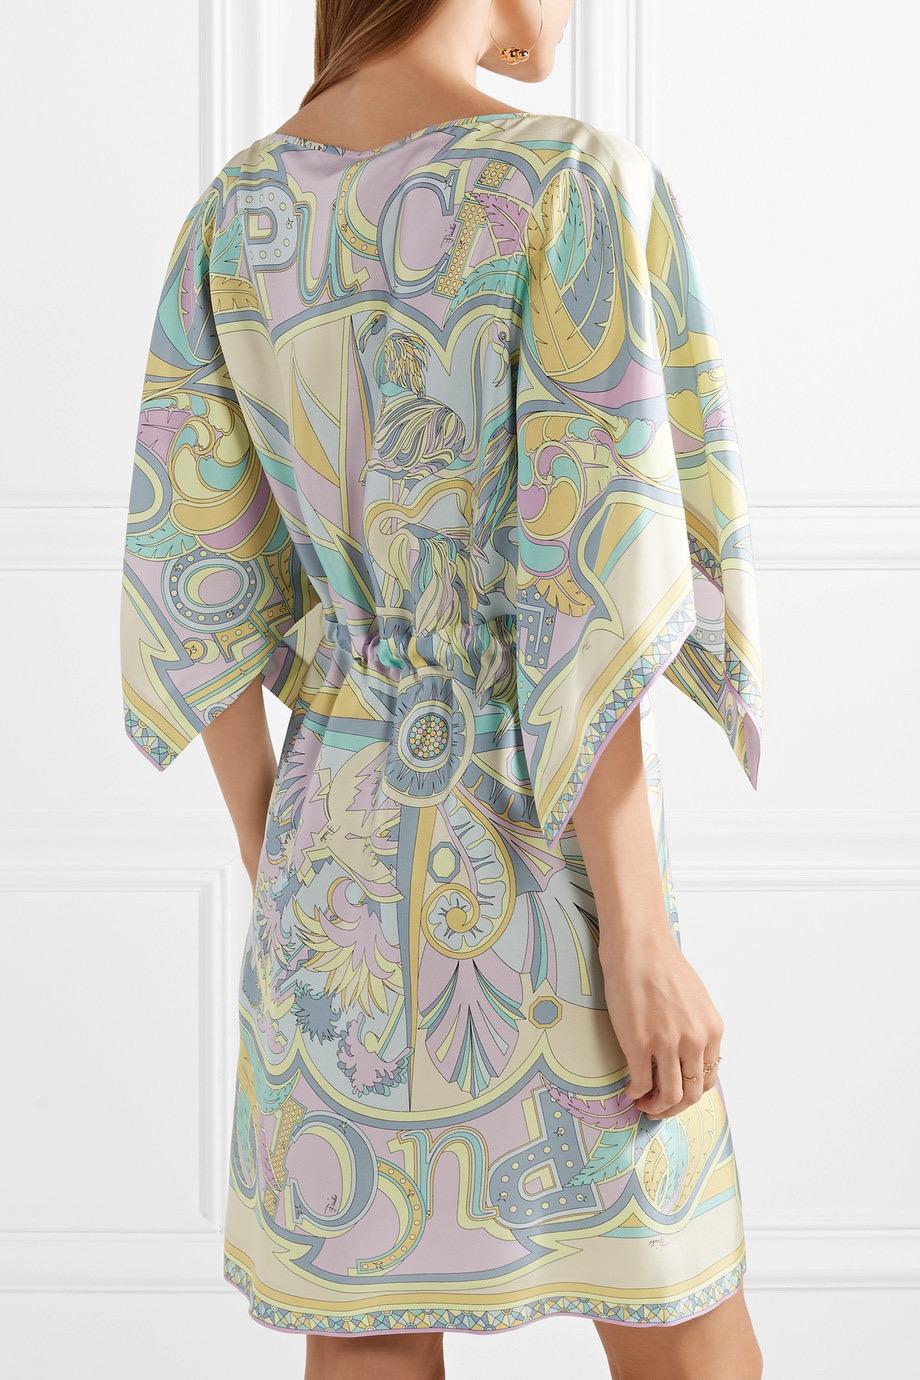 UNWORN Emilio Pucci Multicolor Signature Print Silk Twill Kaftan Tunic Dress 40 For Sale 1